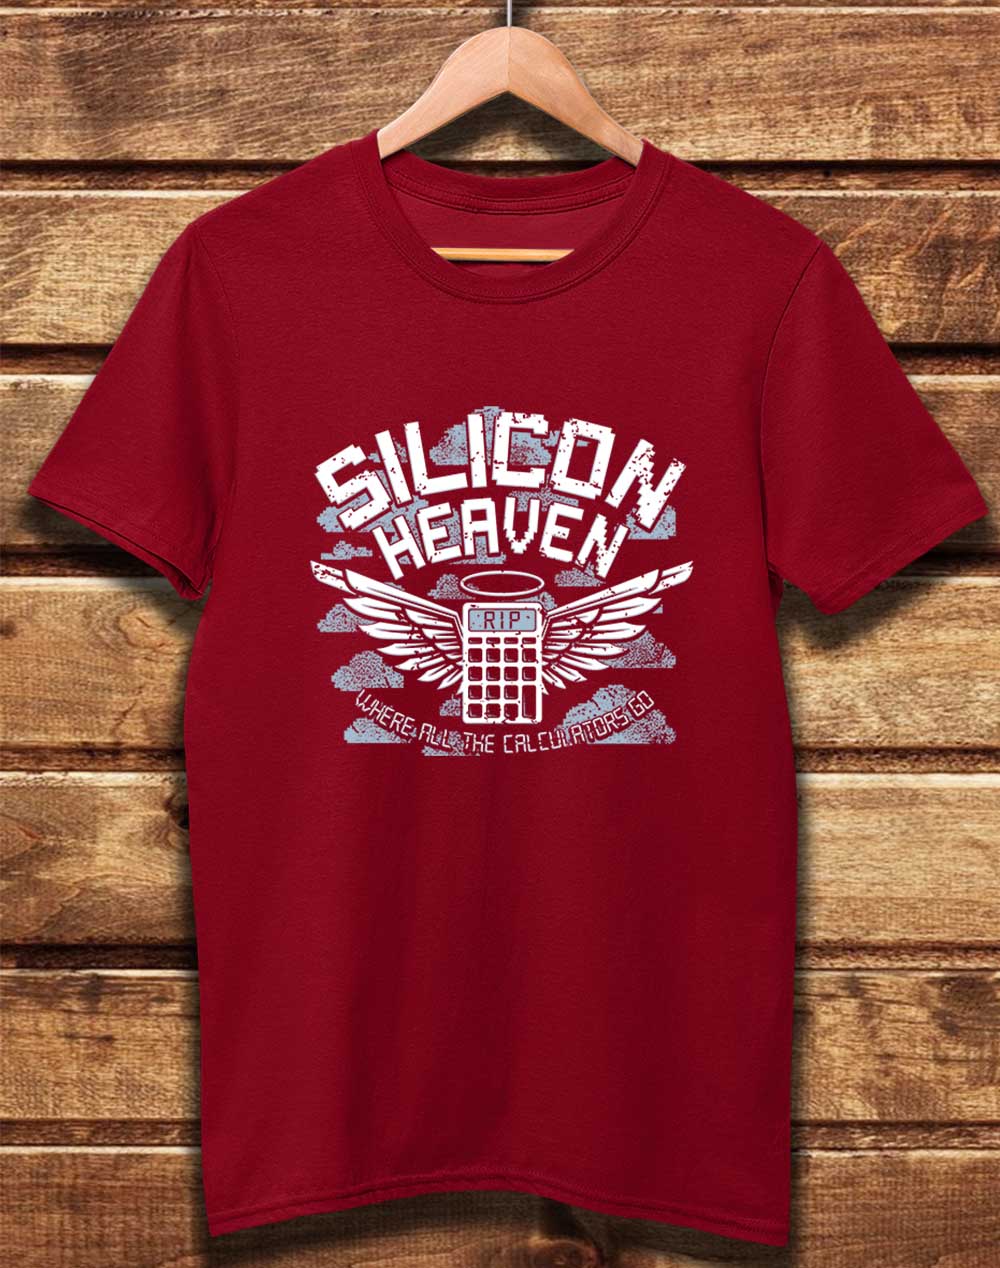 Dark Red - DELUXE Silicon Heaven Organic Cotton T-Shirt